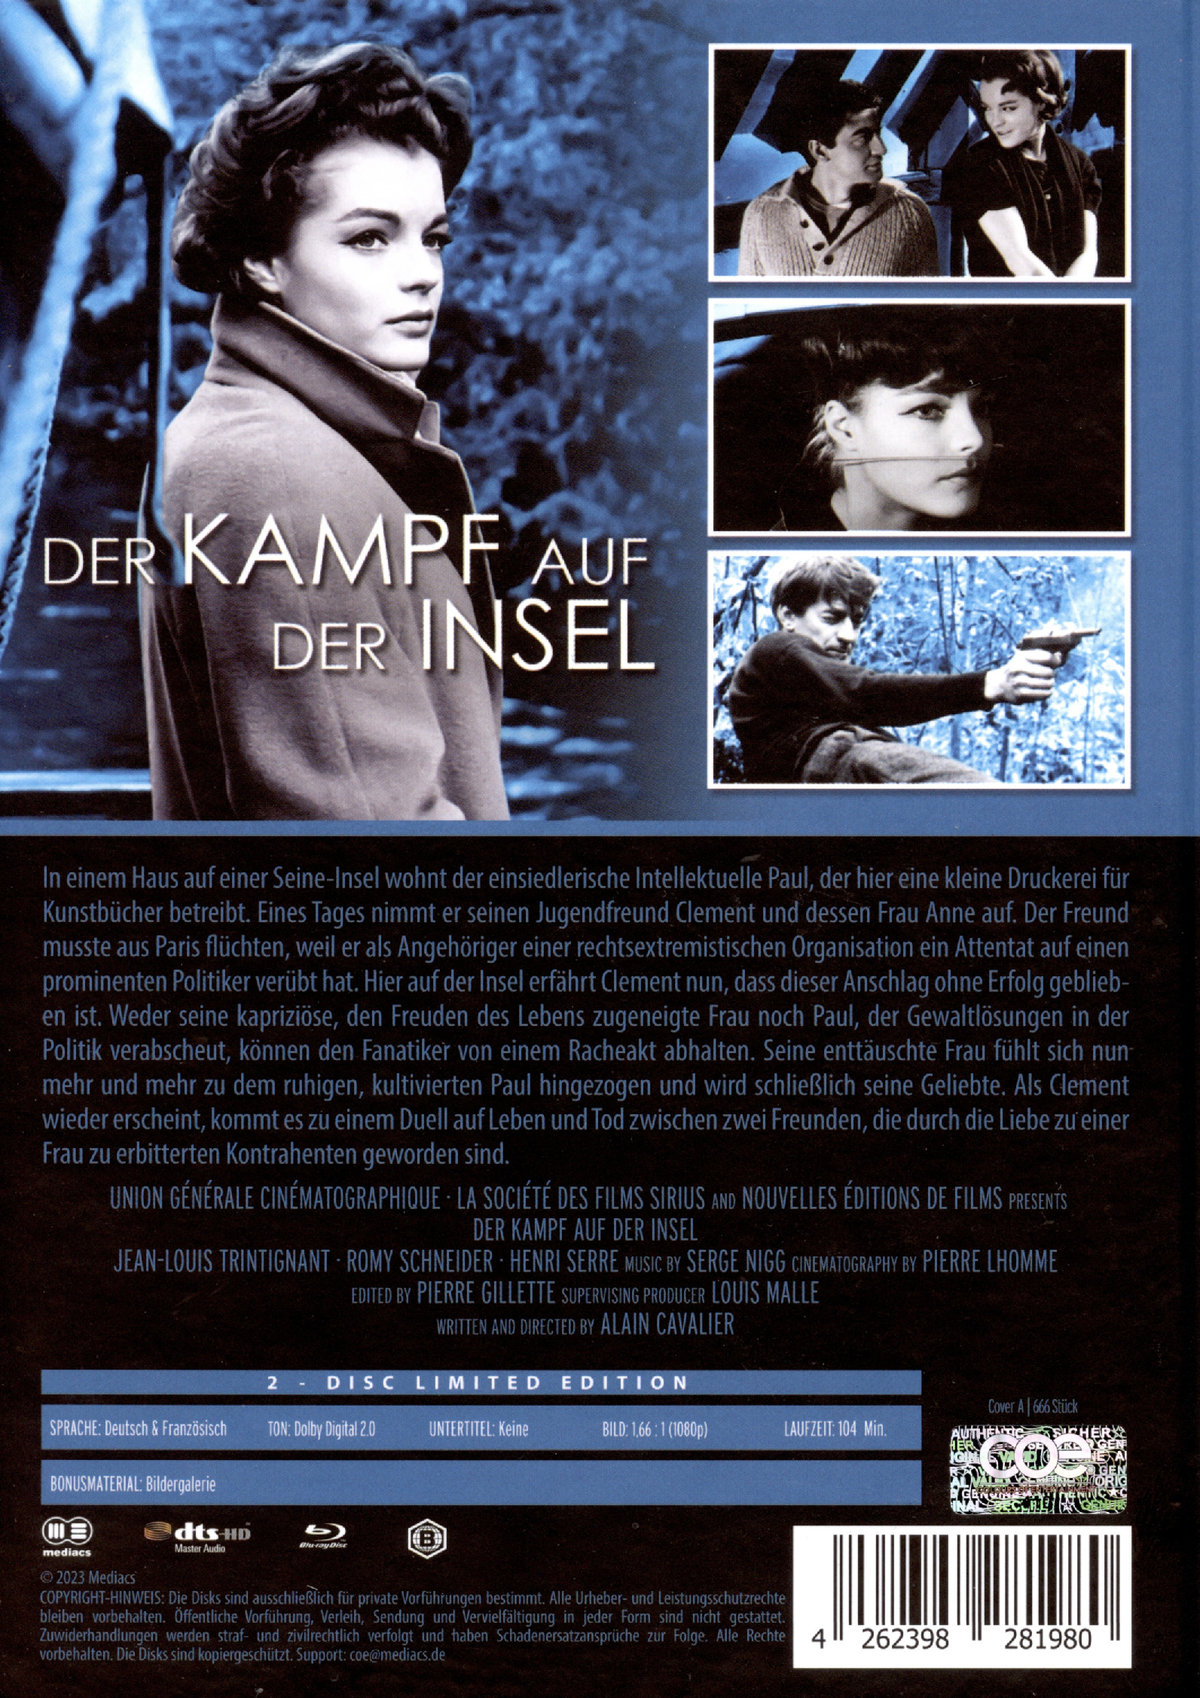 DER KAMPF AUF DER INSEL - Uncut Mediabook Edition  (DVD+blu-ray) (A)